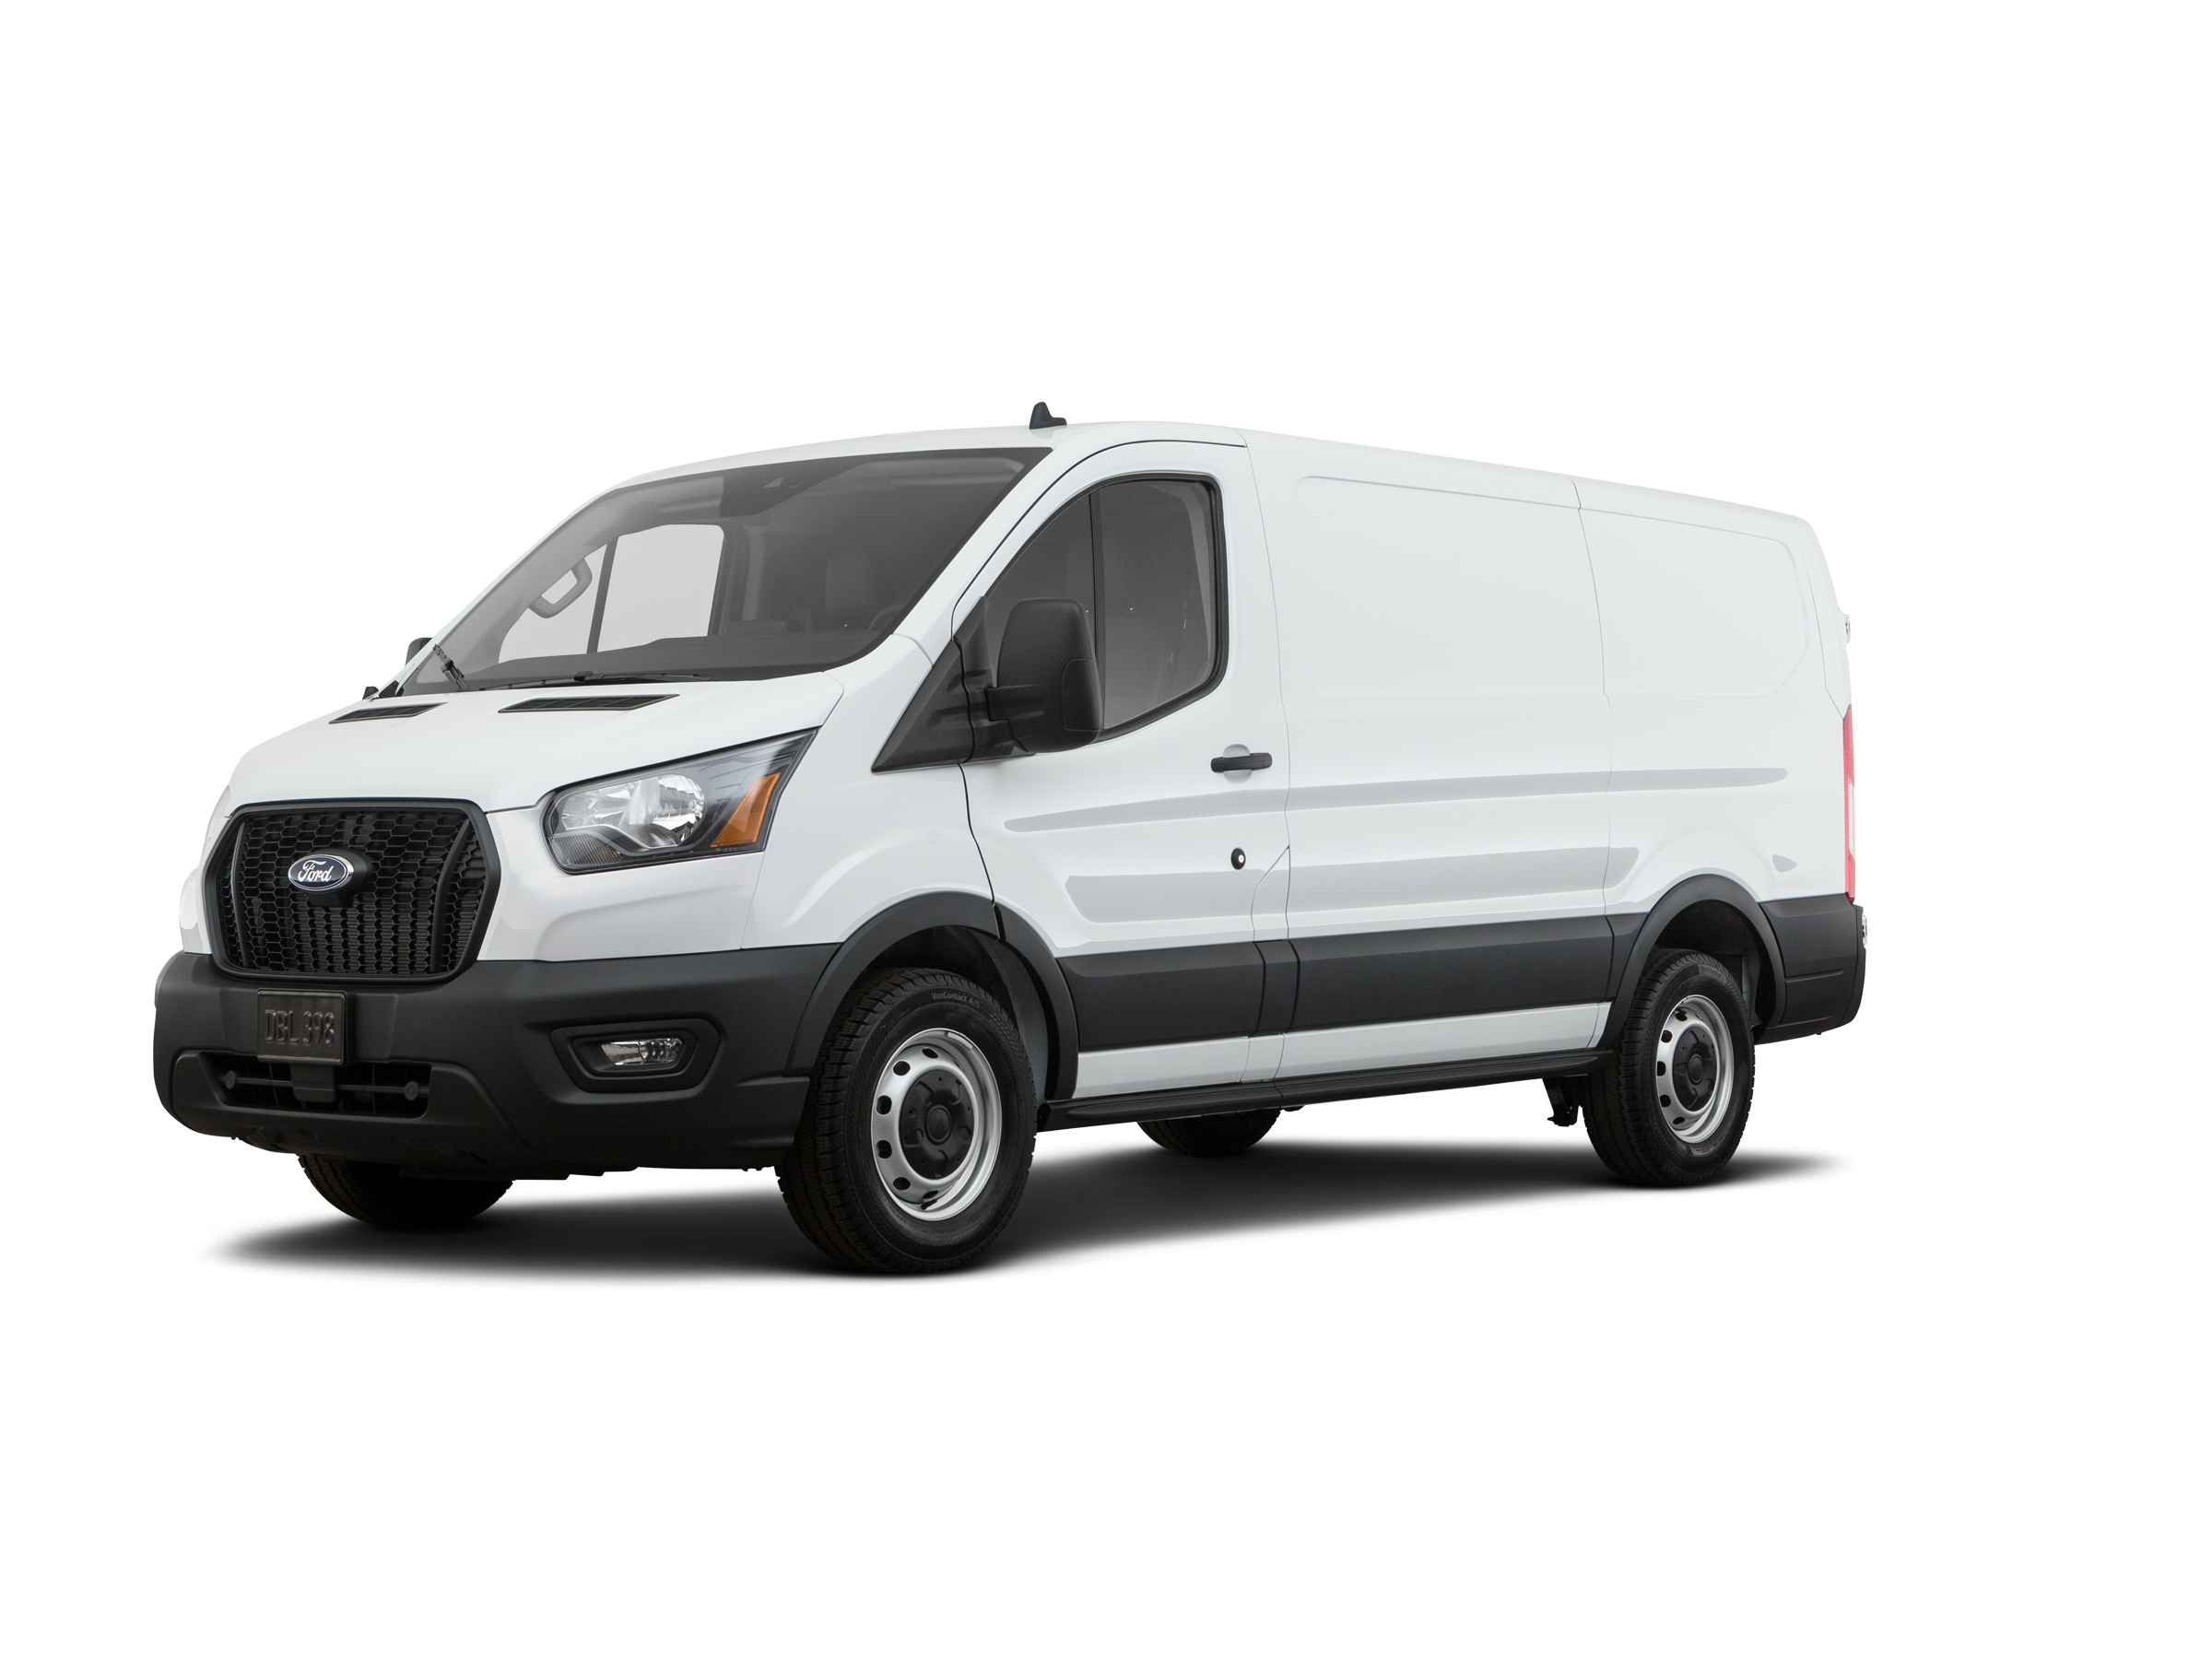 New 2022 Ford Transit 250 Cargo Van Reviews, Pricing & Specs Kelley